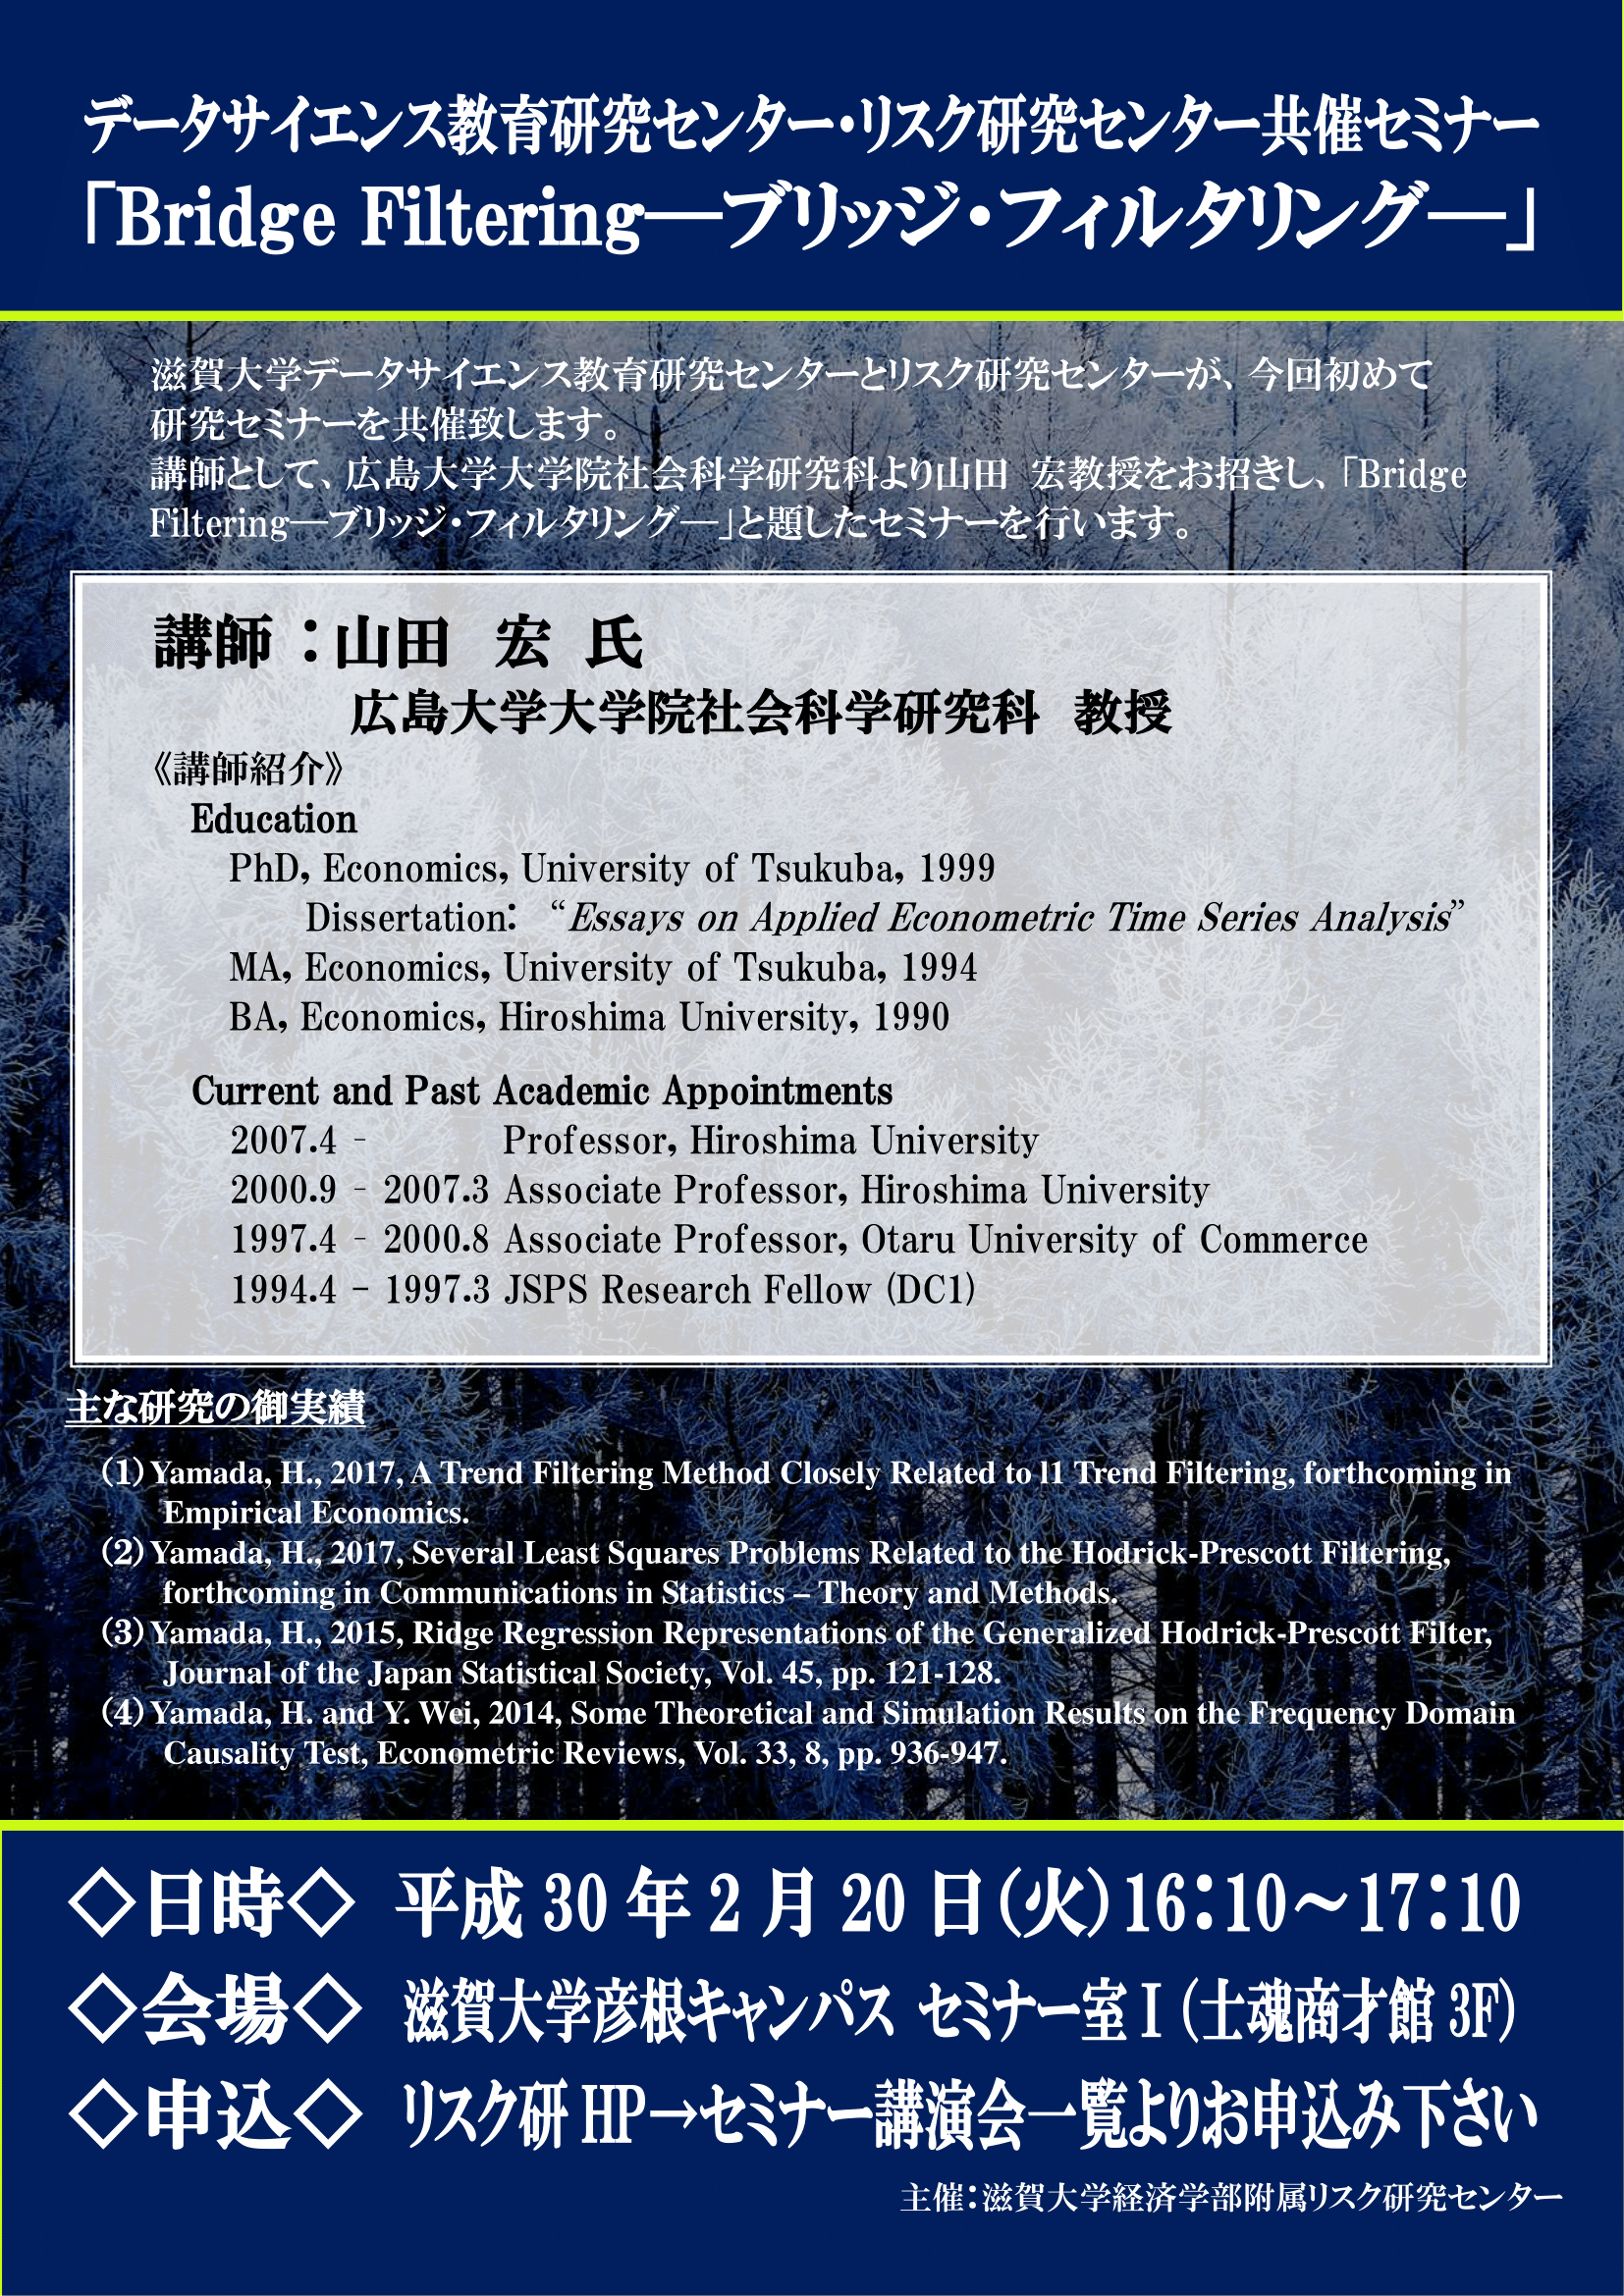 https://www.econ.shiga-u.ac.jp/risk/poster20180220.png